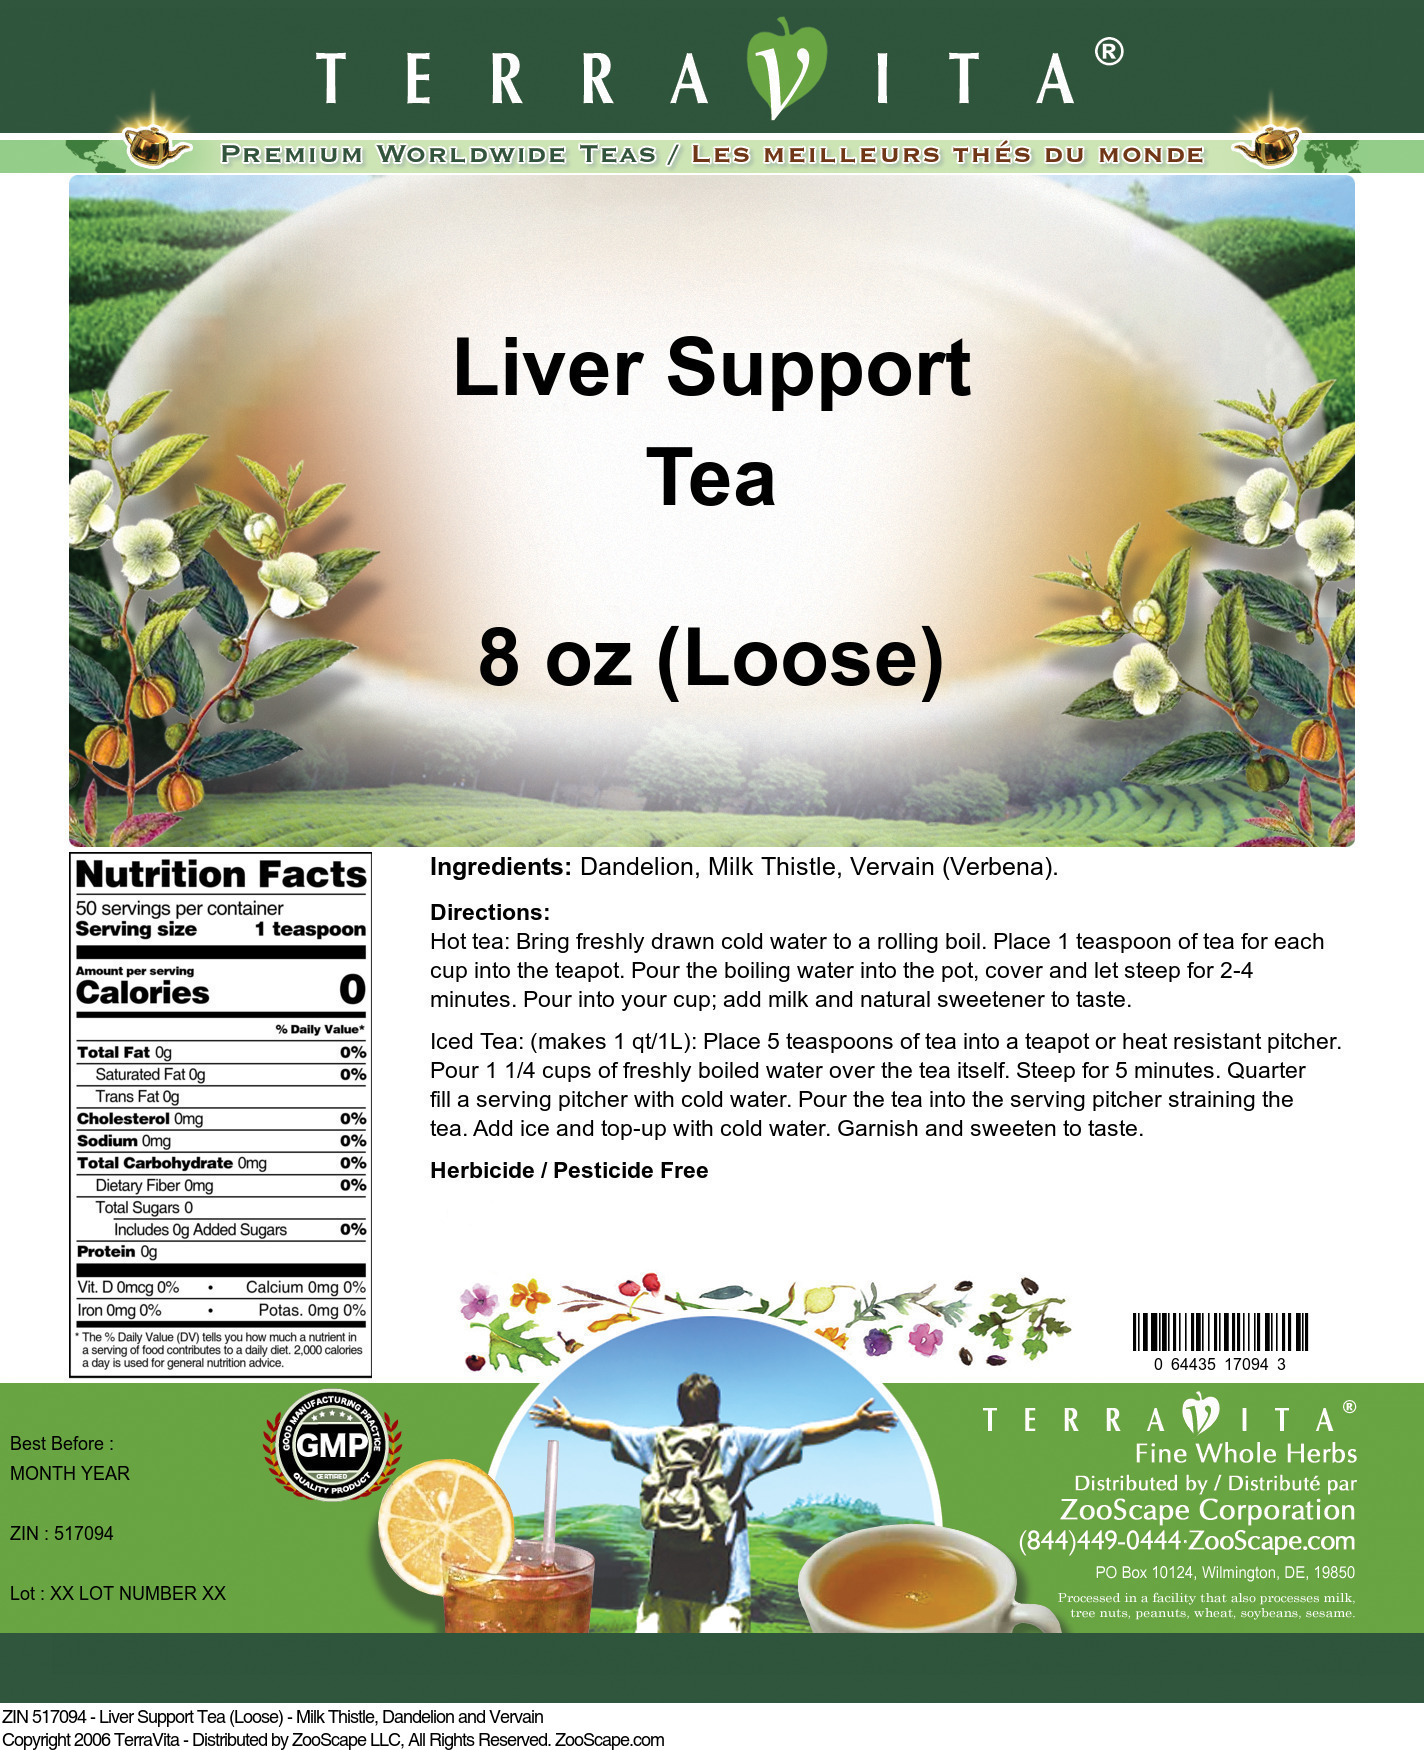 Liver Support Tea (Loose) - Milk Thistle, Dandelion and Vervain - Label